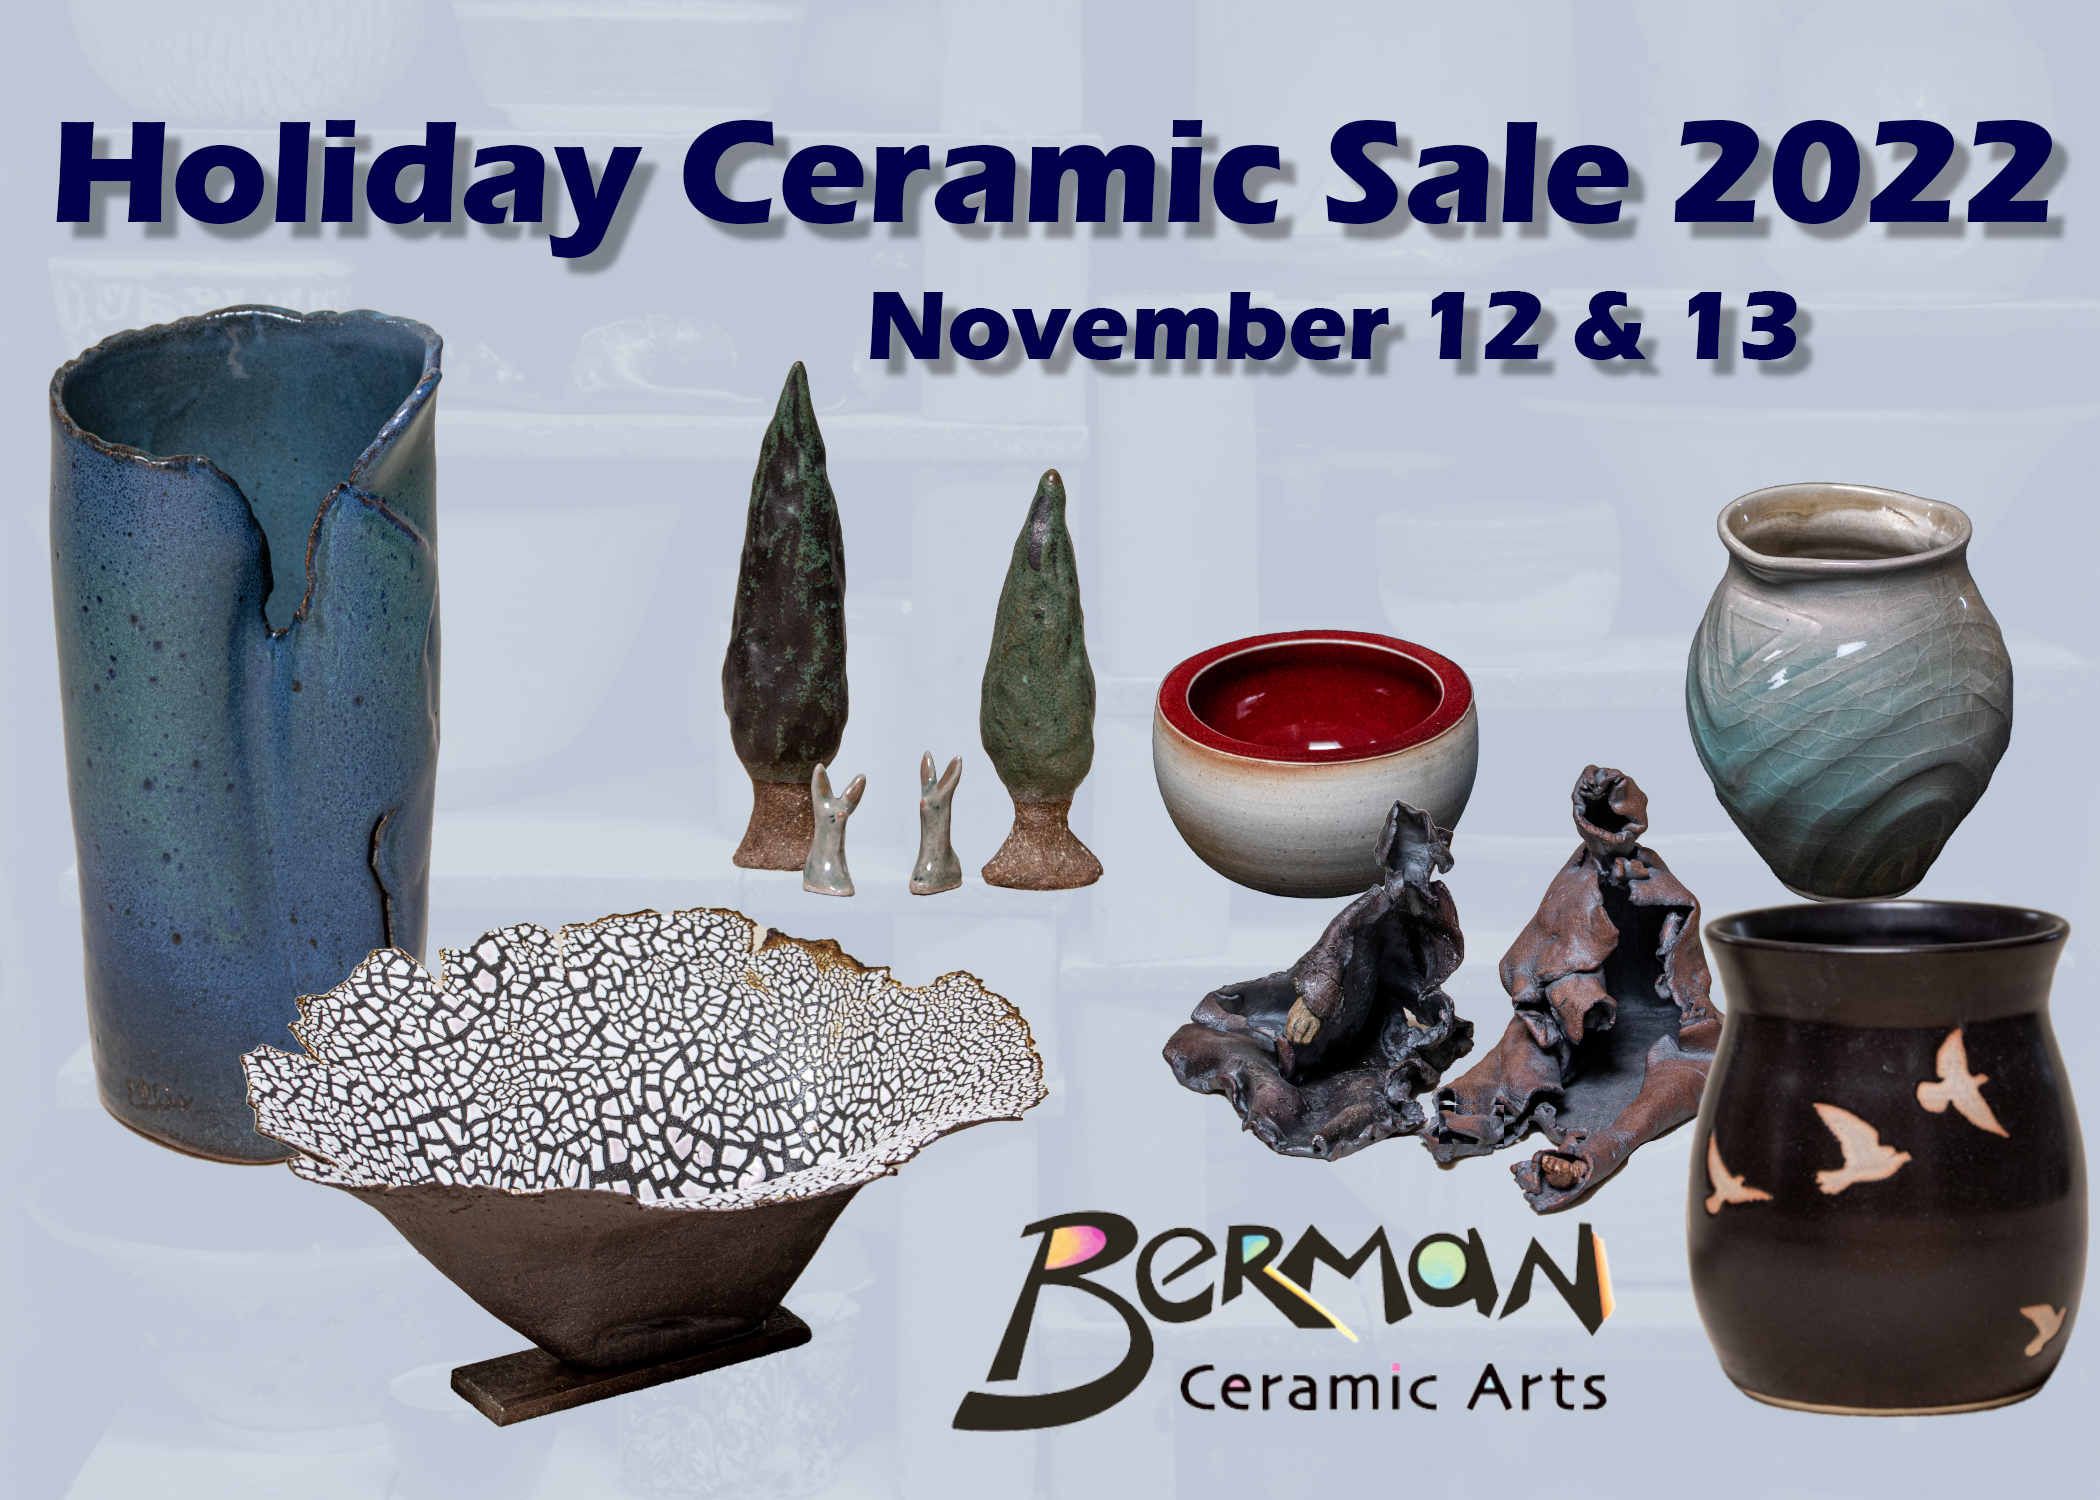 Berman Ceramic Arts Holiday Sale